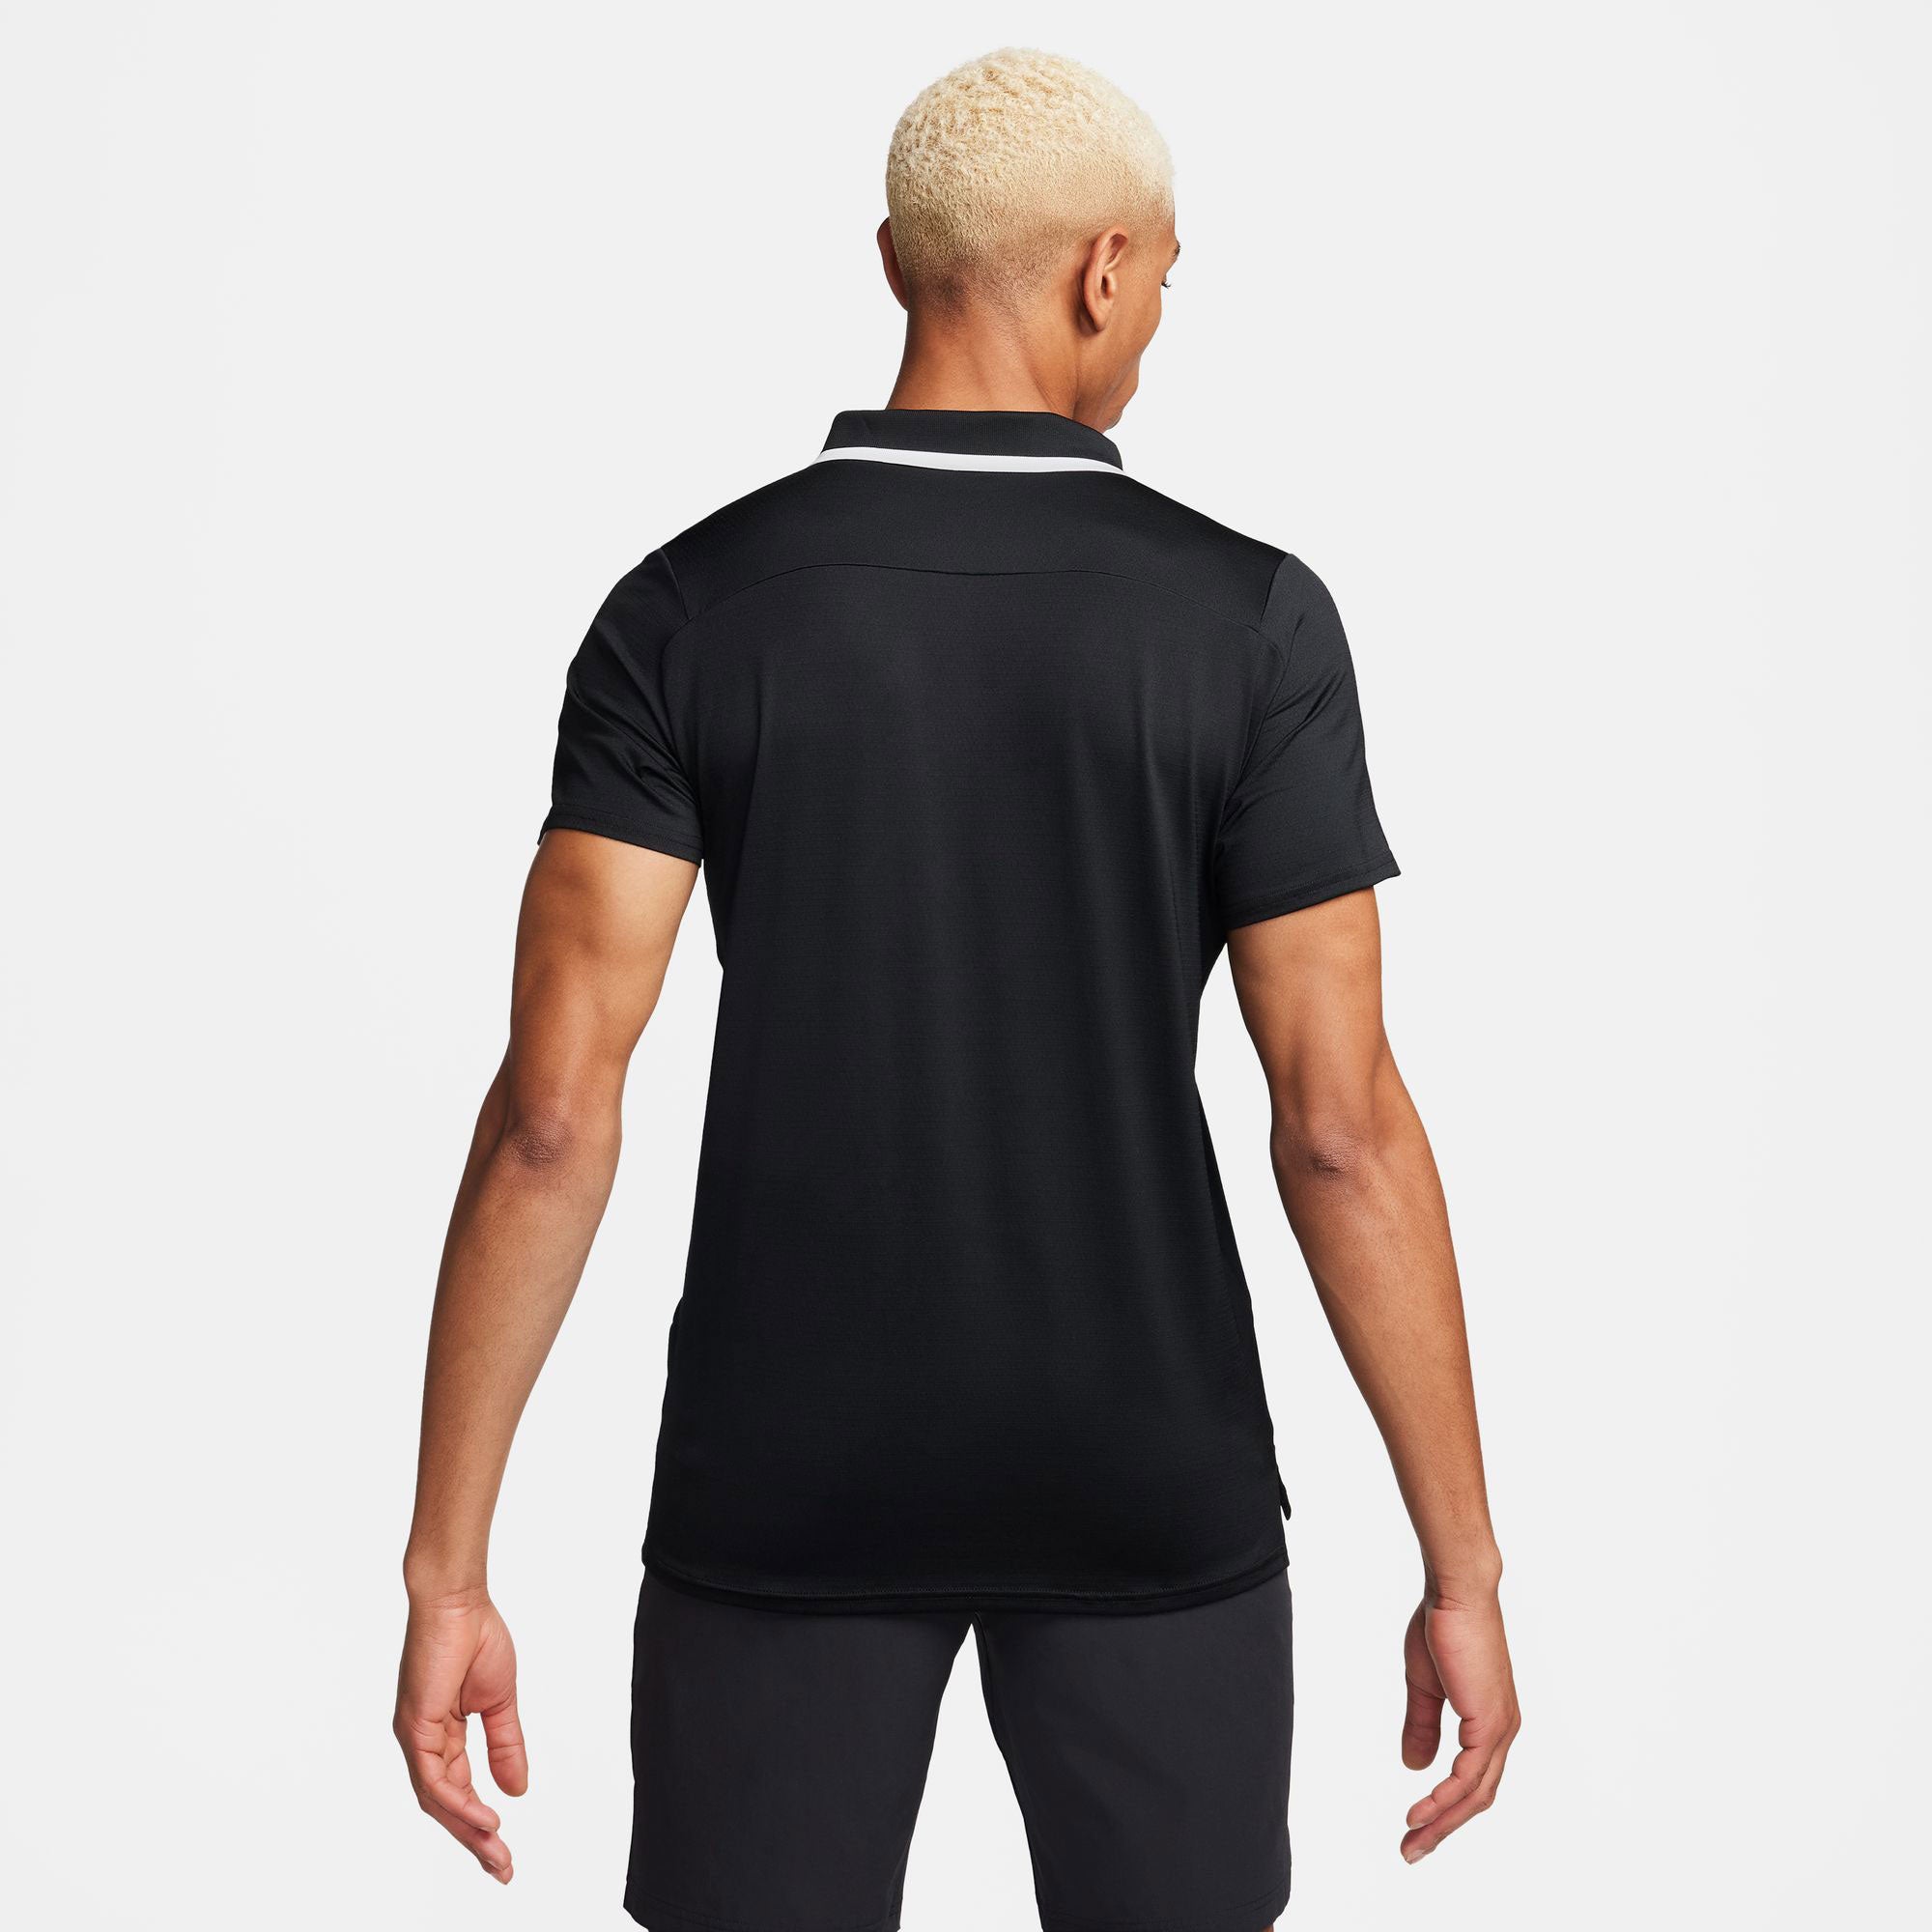 Nike Court Flex Gladiator 7 Tennis Shorts Mens Size XL Ocean Fog 729399-404  : : Clothing & Accessories